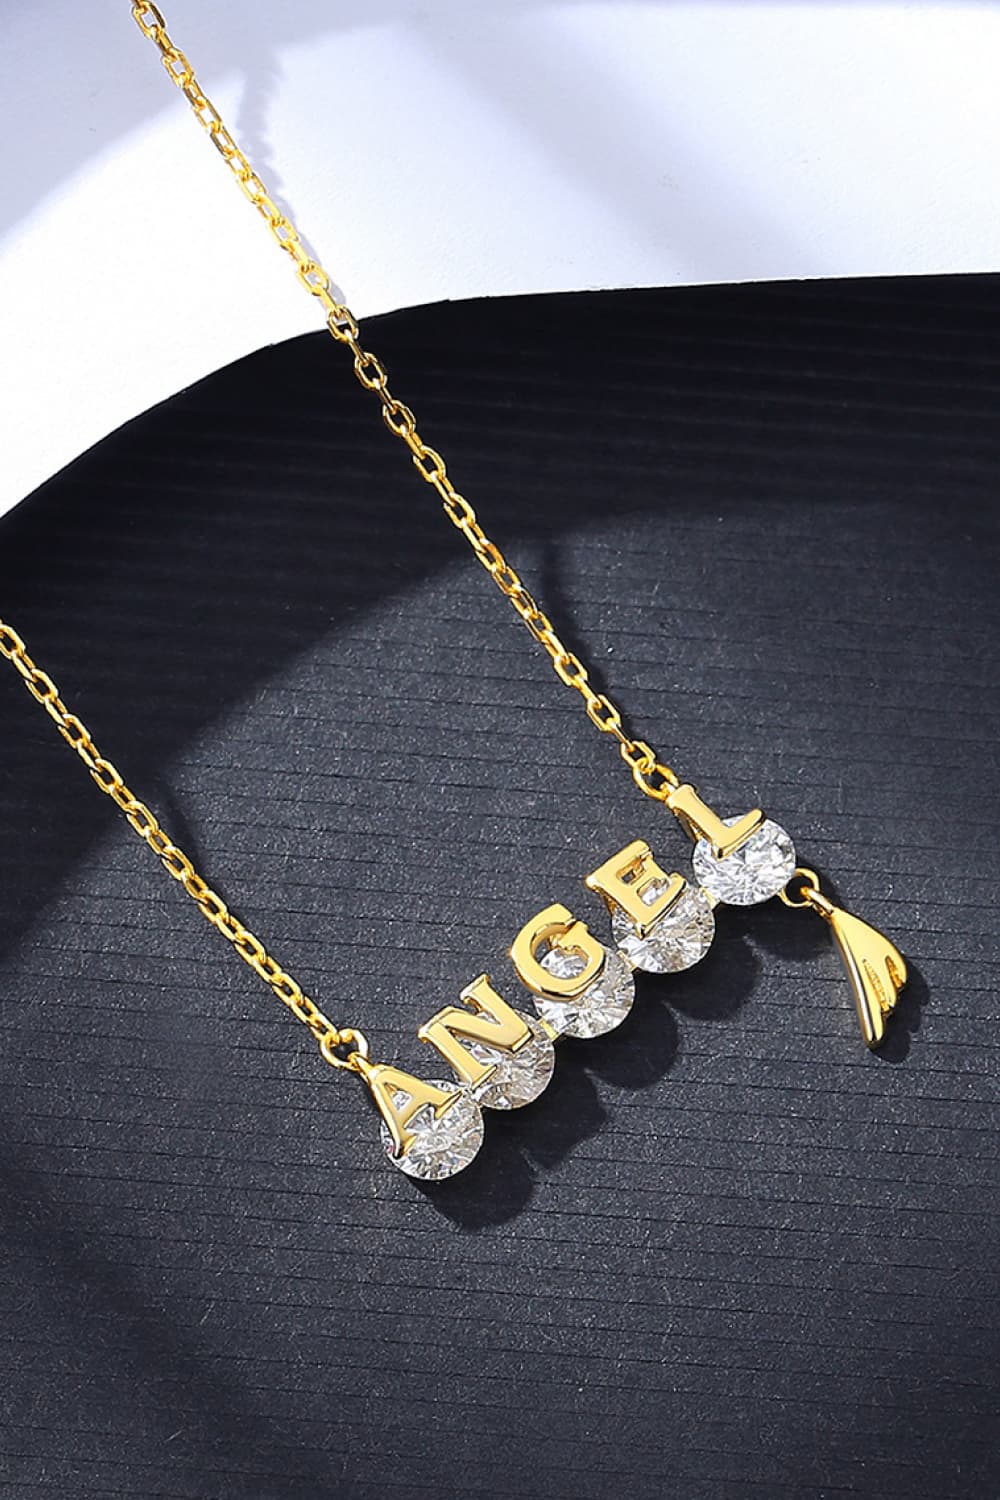 ANGEL Zircon 925 Sterling Silver Necklace - #WestTrend#